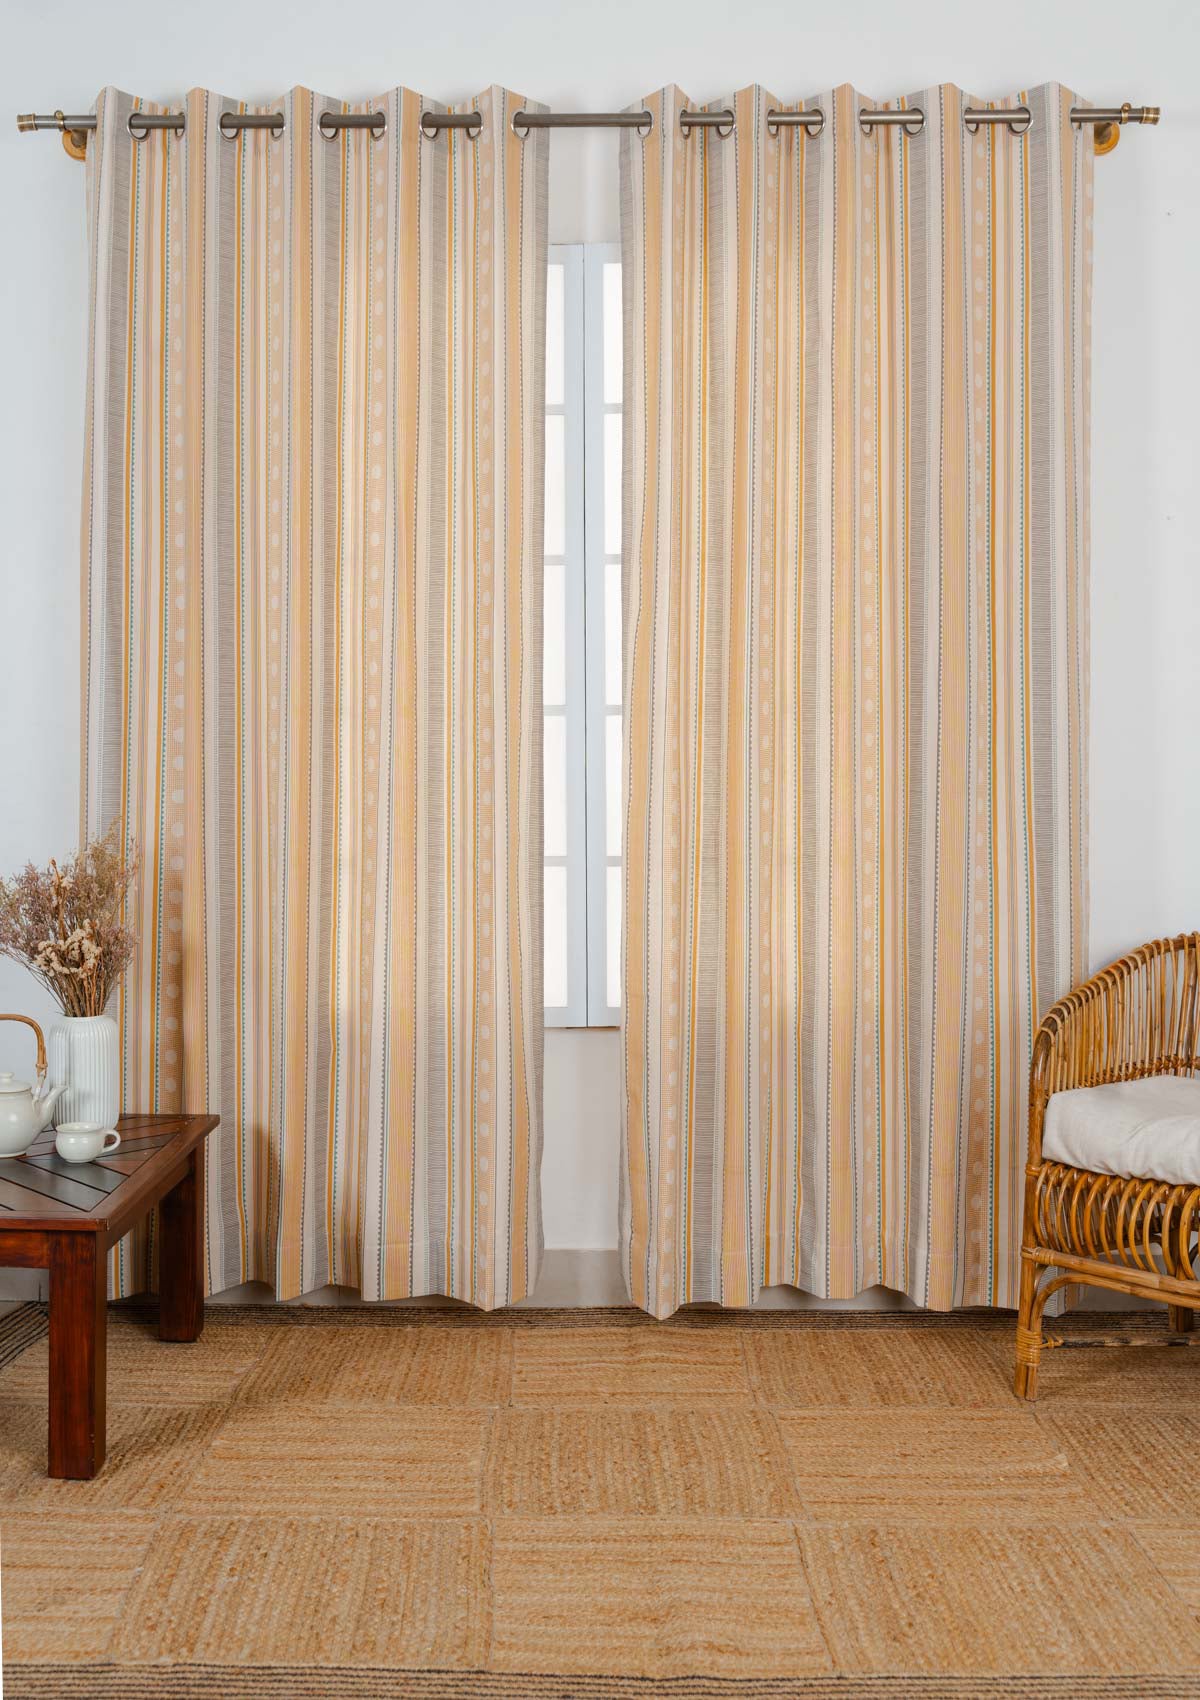 Buru 100% cotton boho curtain for living room - Room darkening - Mustard - Single - Pack of 1